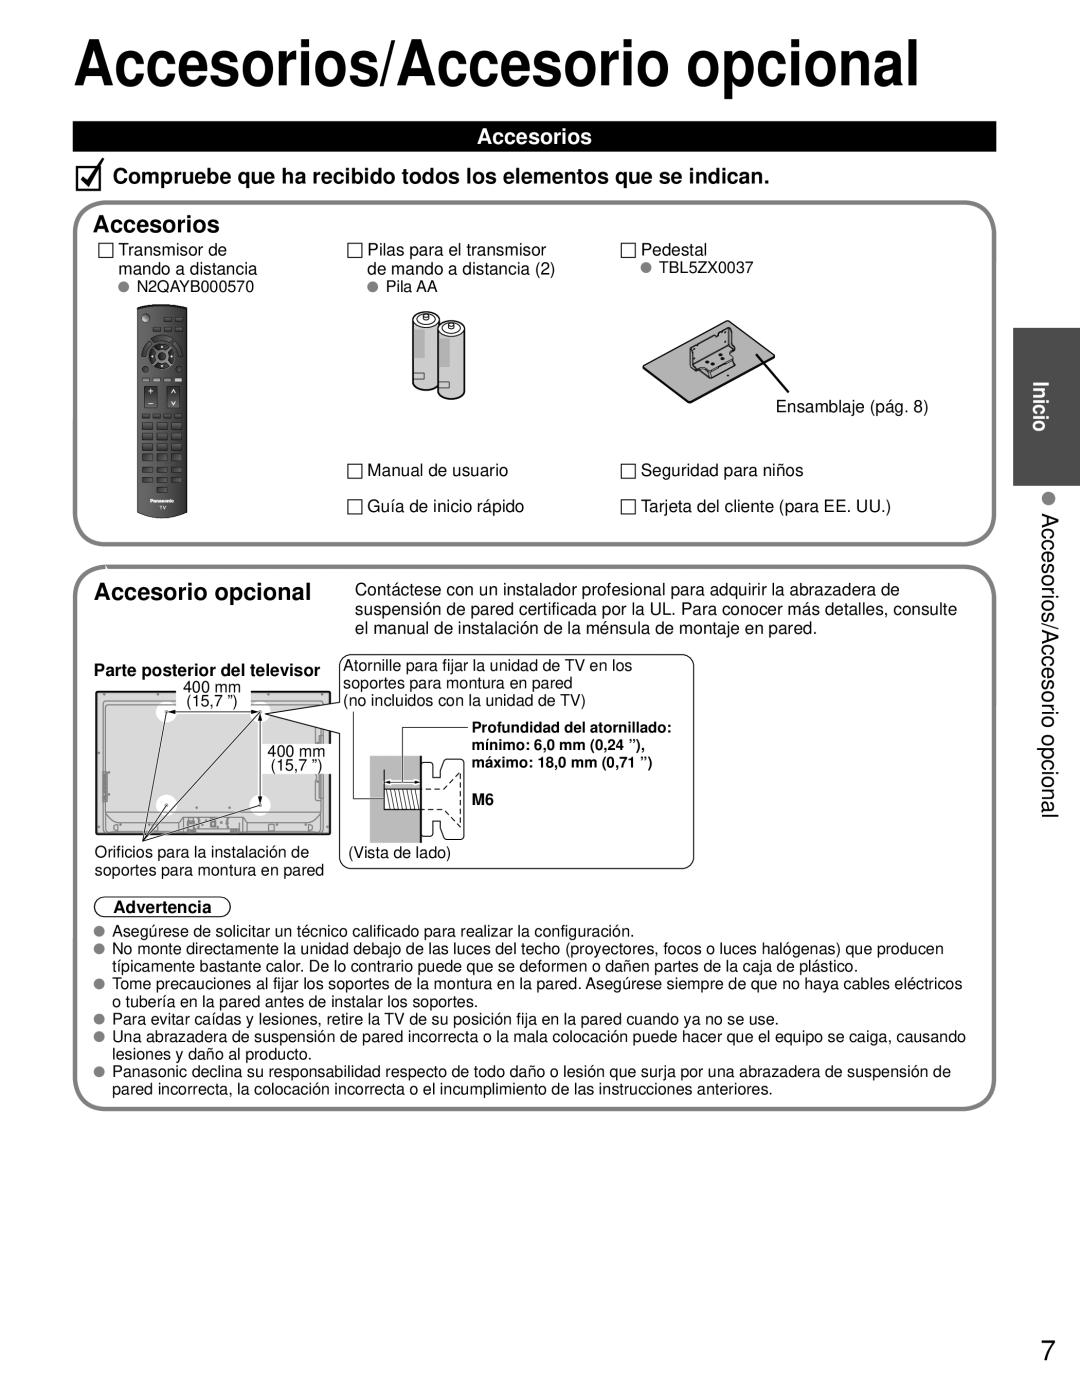 Panasonic TC-L42E3 Accesorios/Accesorio opcional, Inicio Accesorios/Accesorio, Parte posterior del televisor, Advertencia 